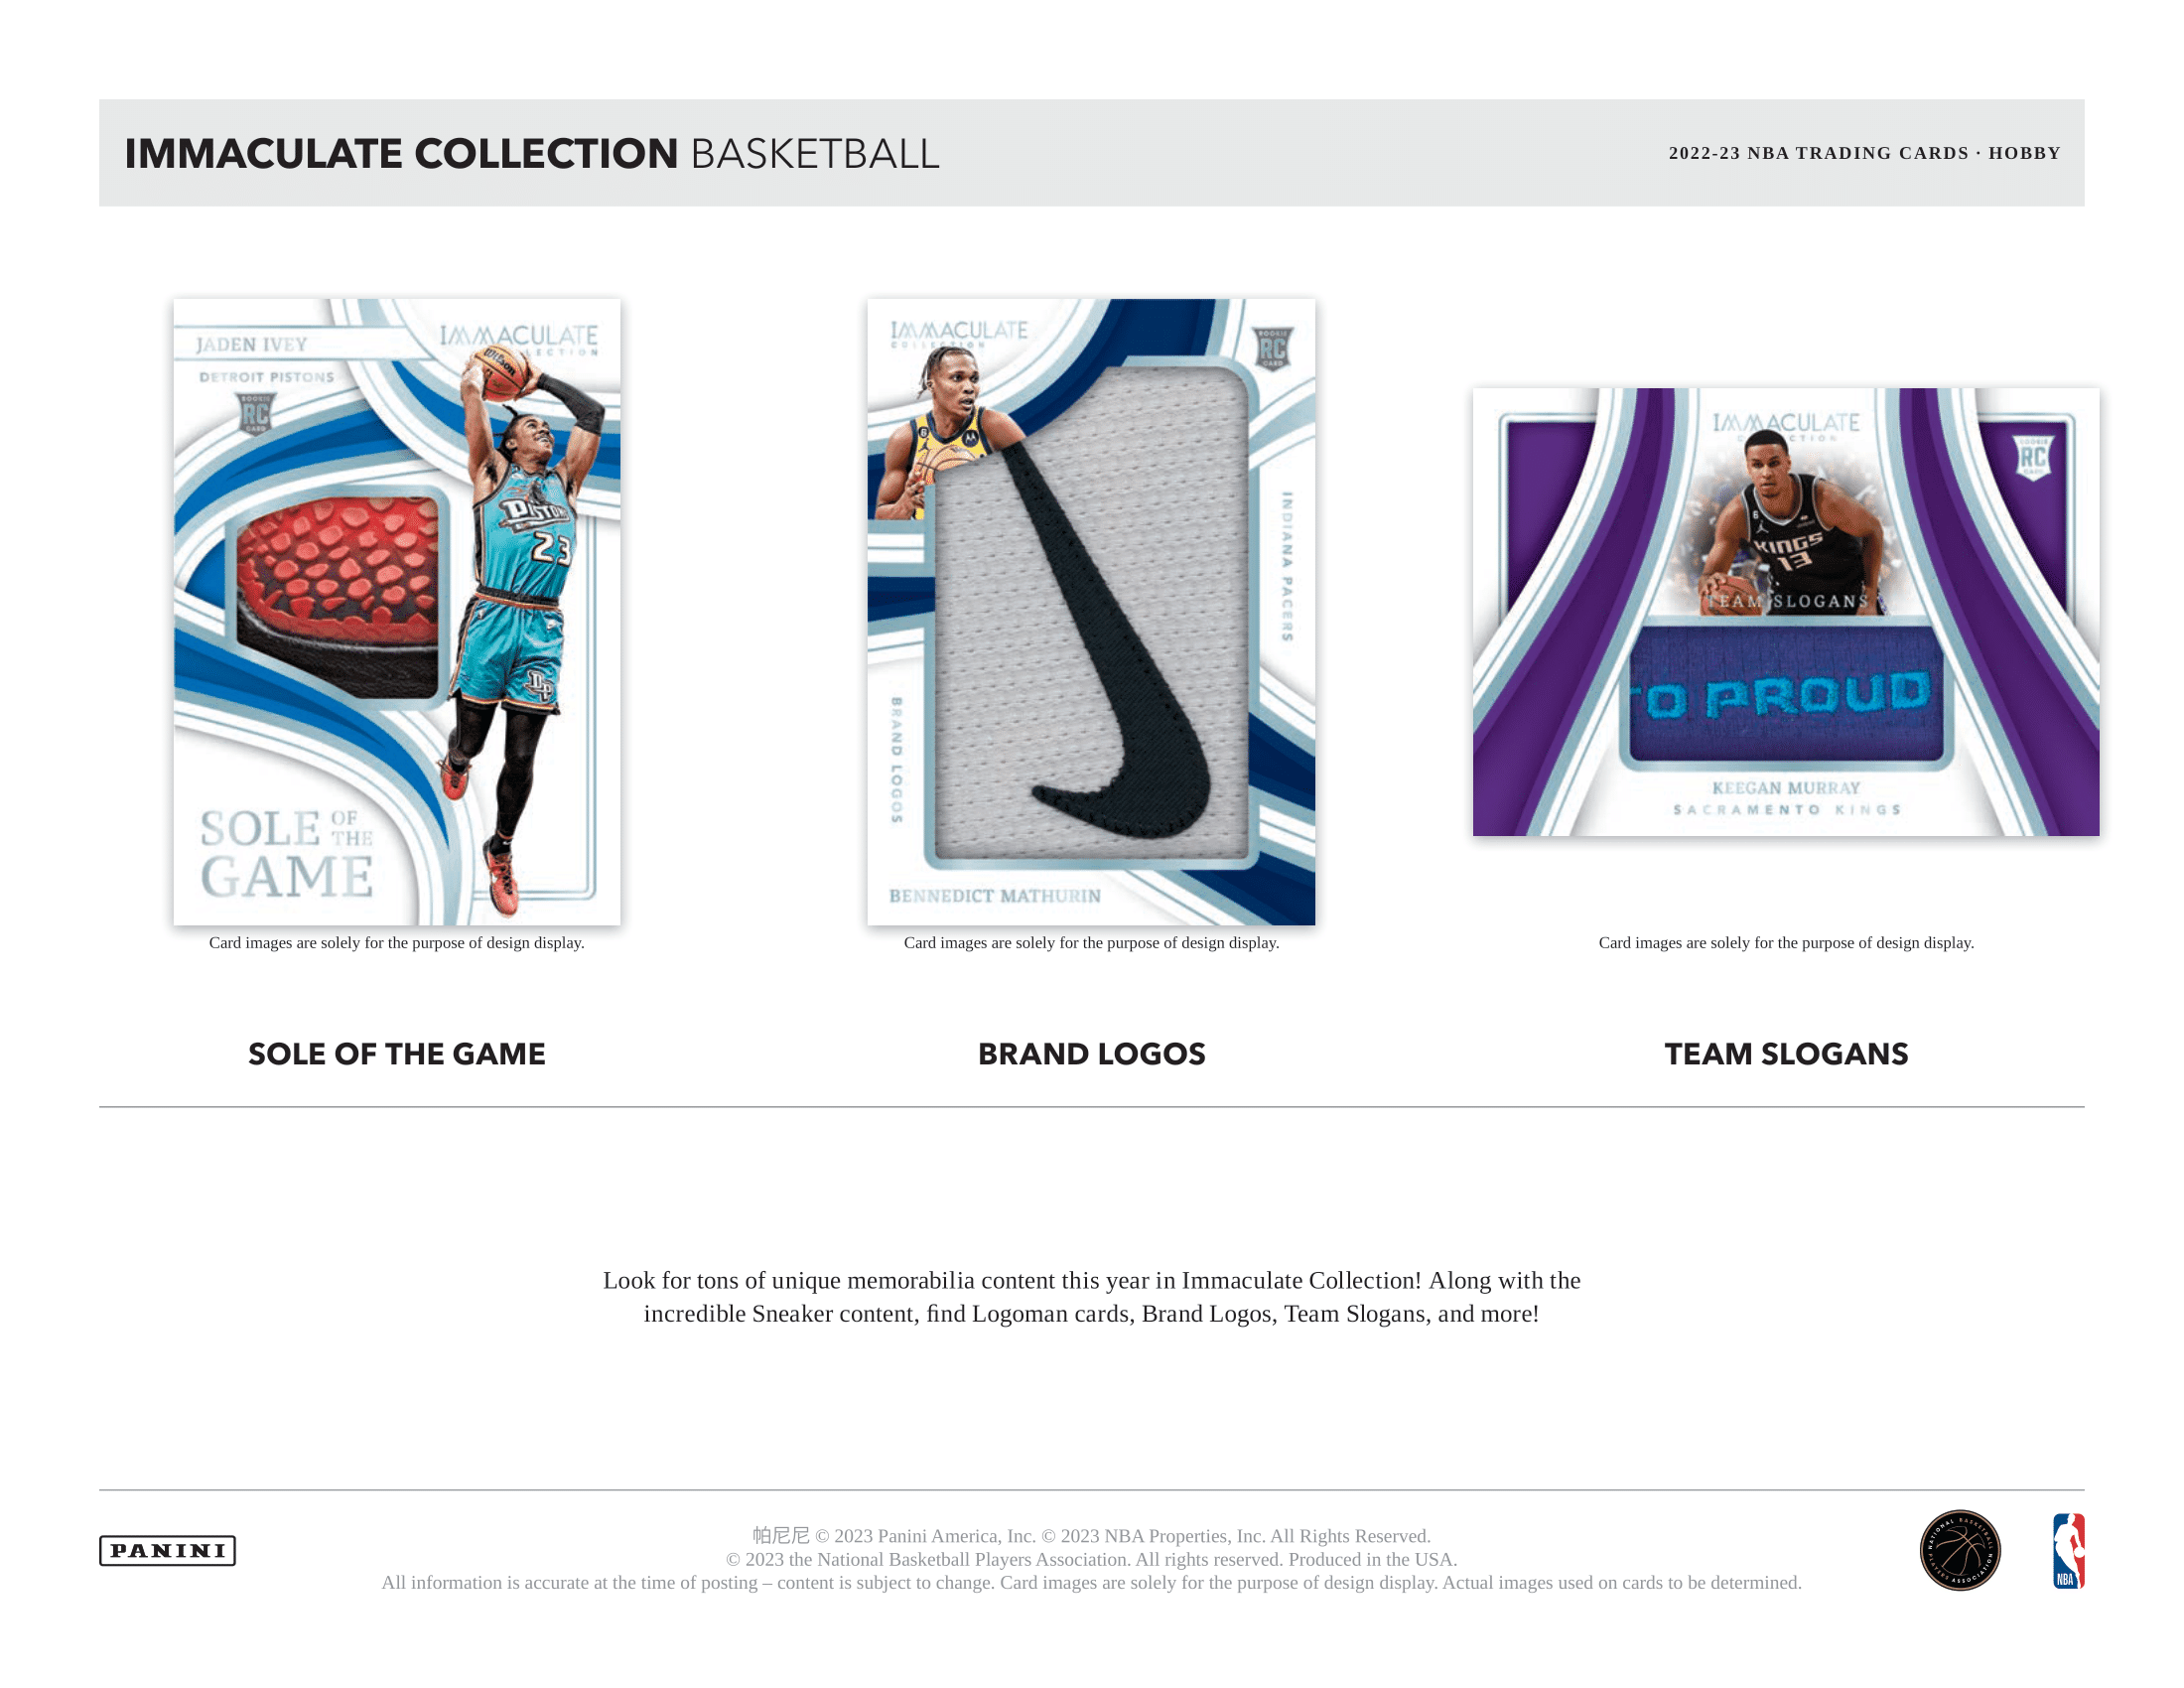 Panini - 2022/23 Immaculate Collection Basketball (NBA) - Hobby Box - The Card Vault